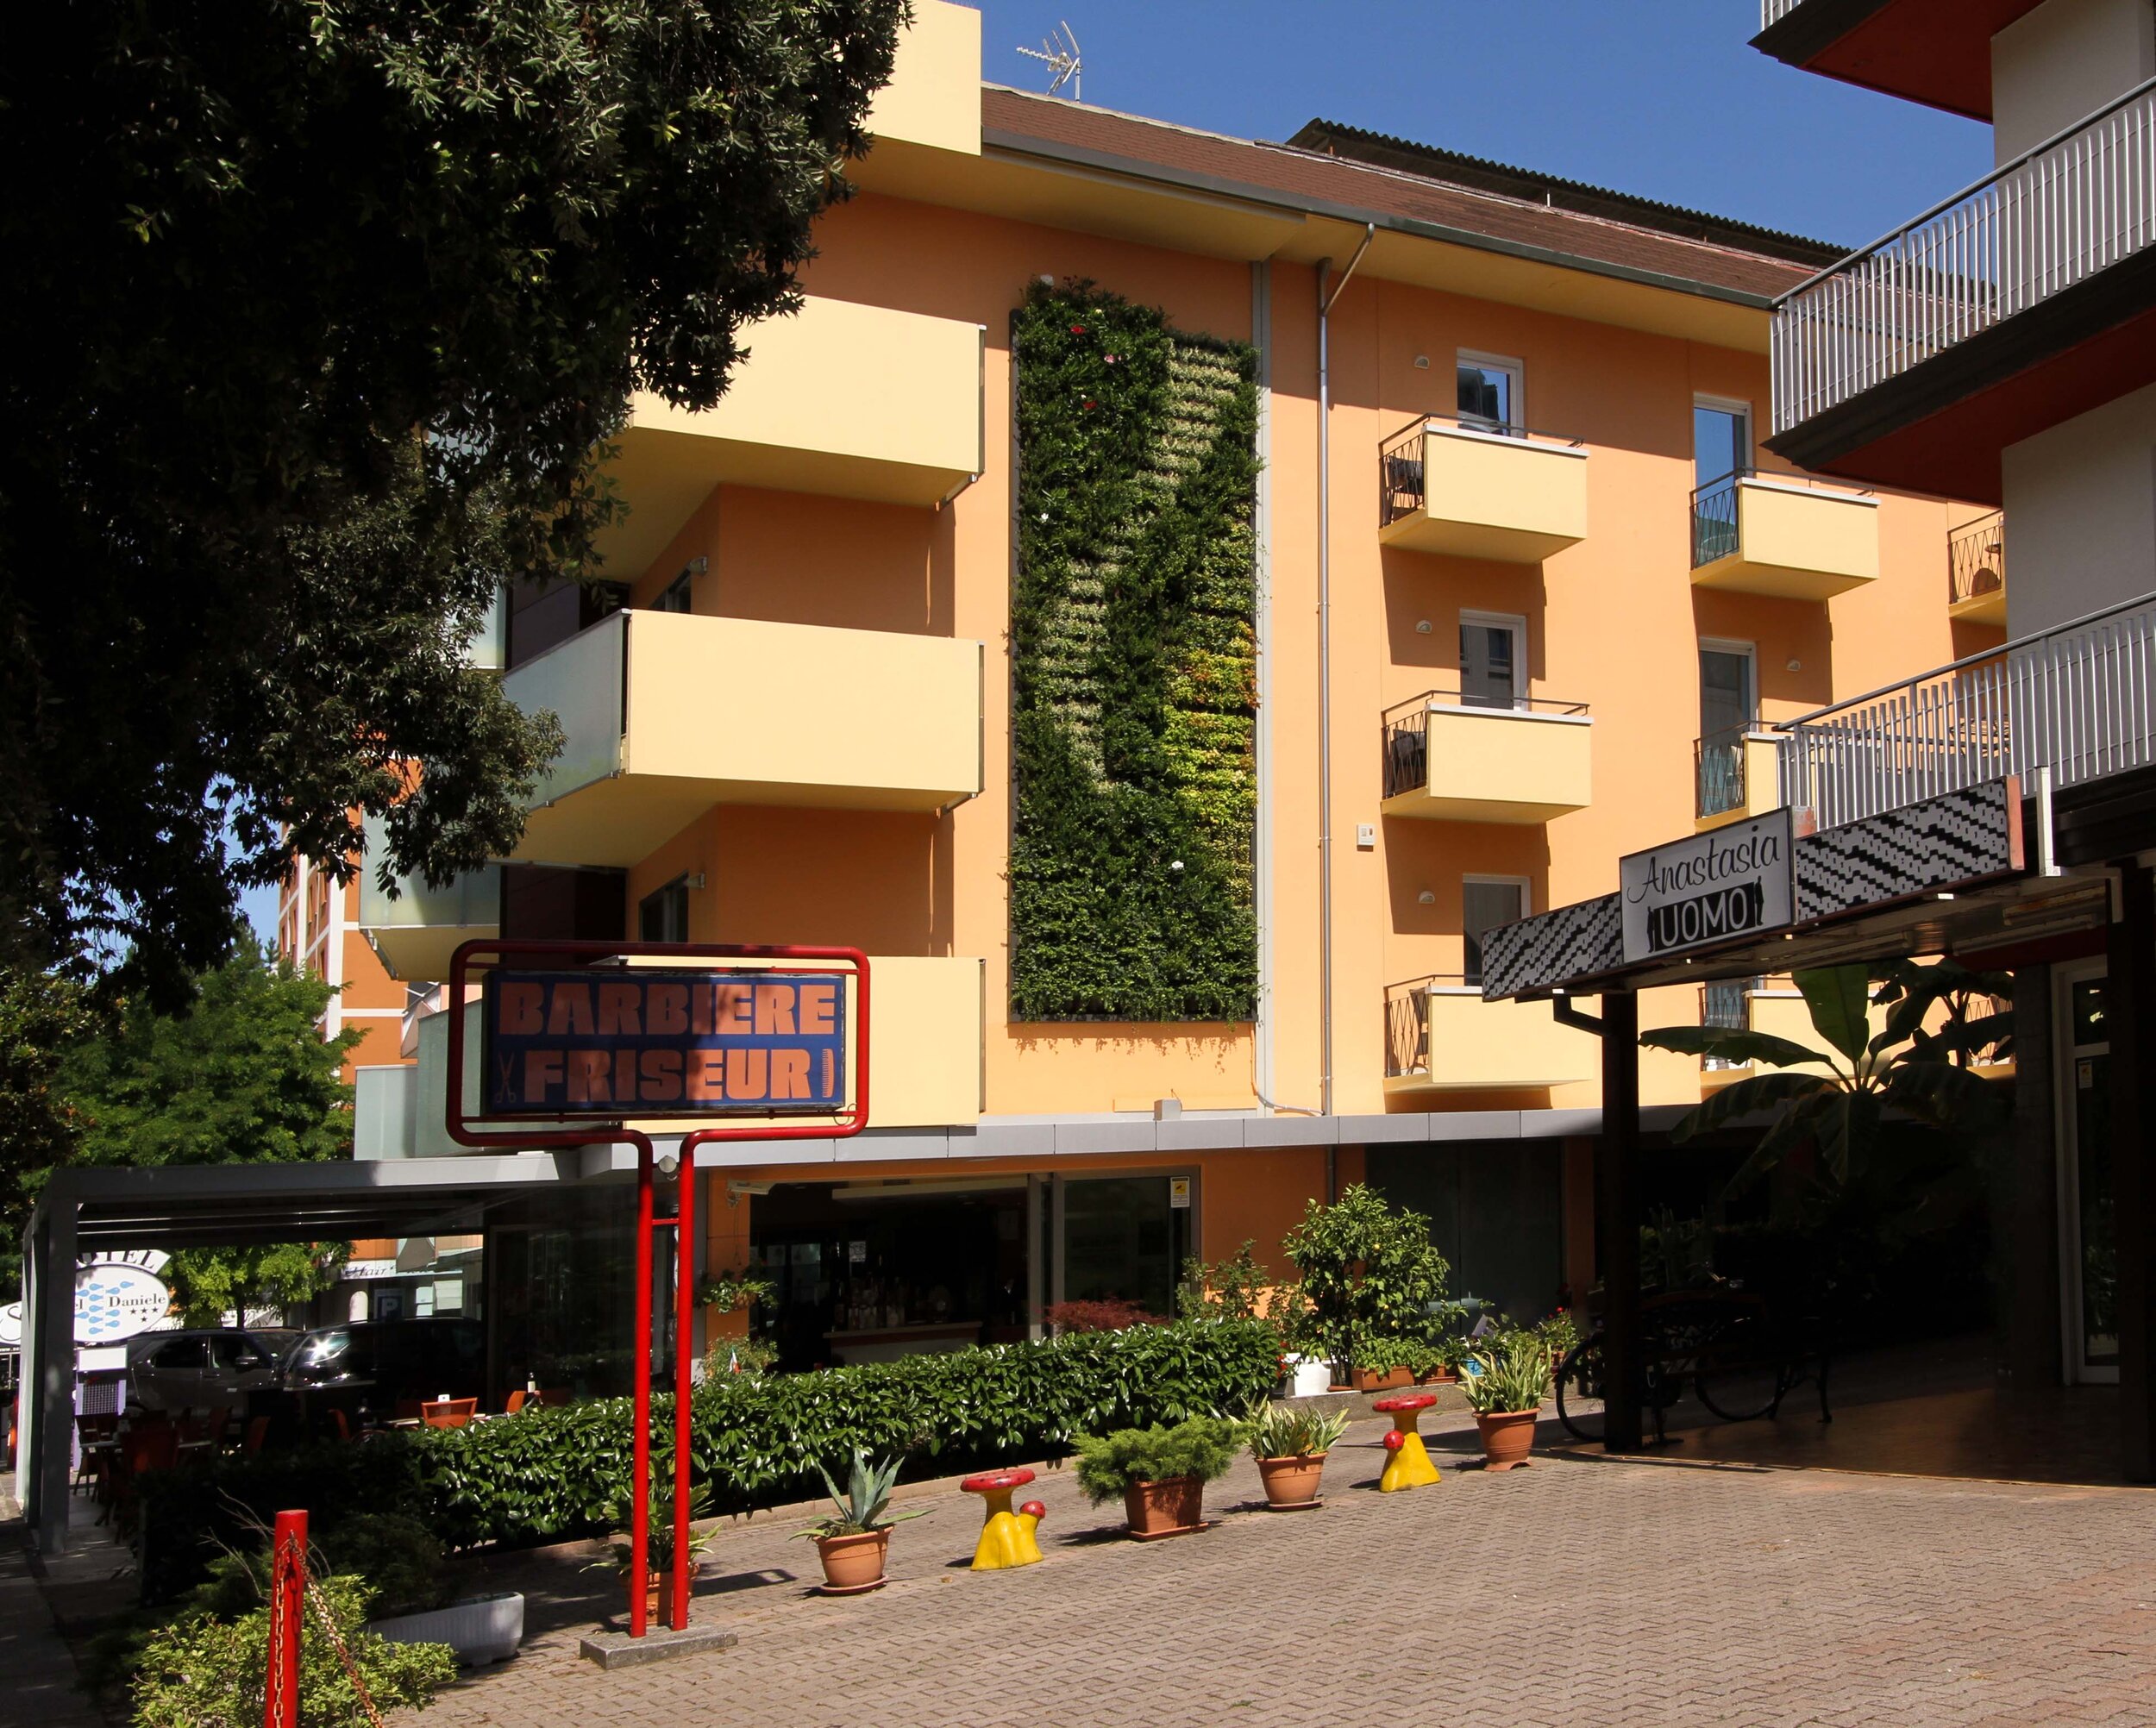 daniele-hotel-garden-vertical-wall-green-sundar-italia-004.jpg